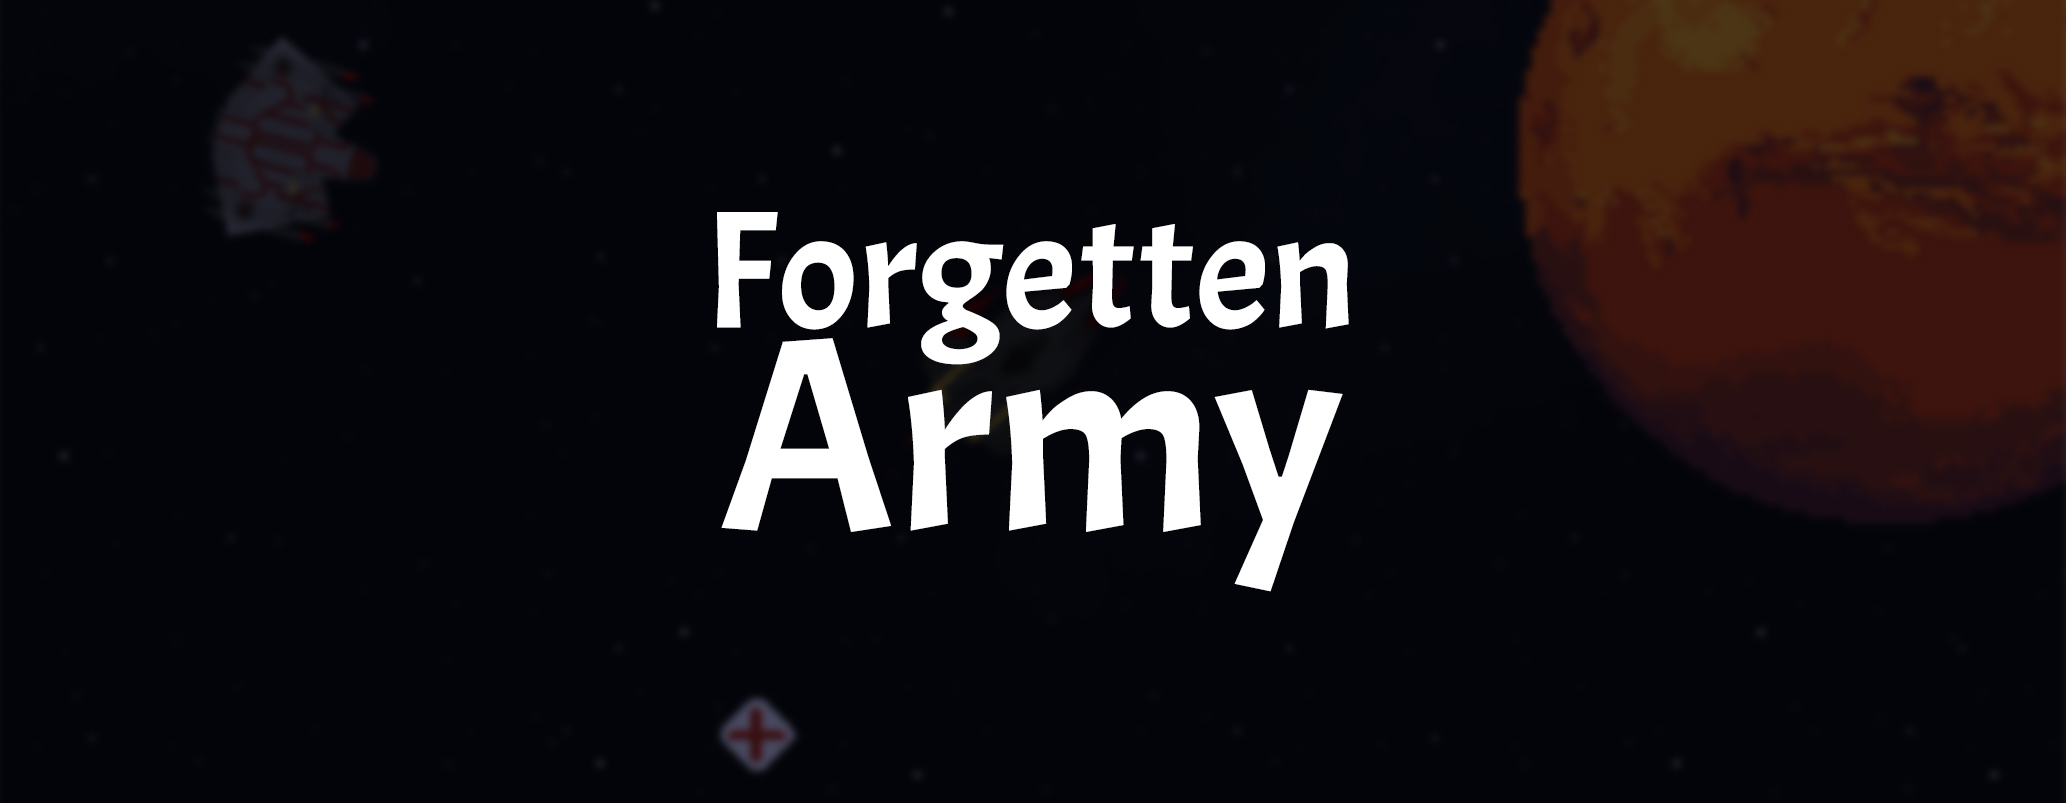 Forgotten Army